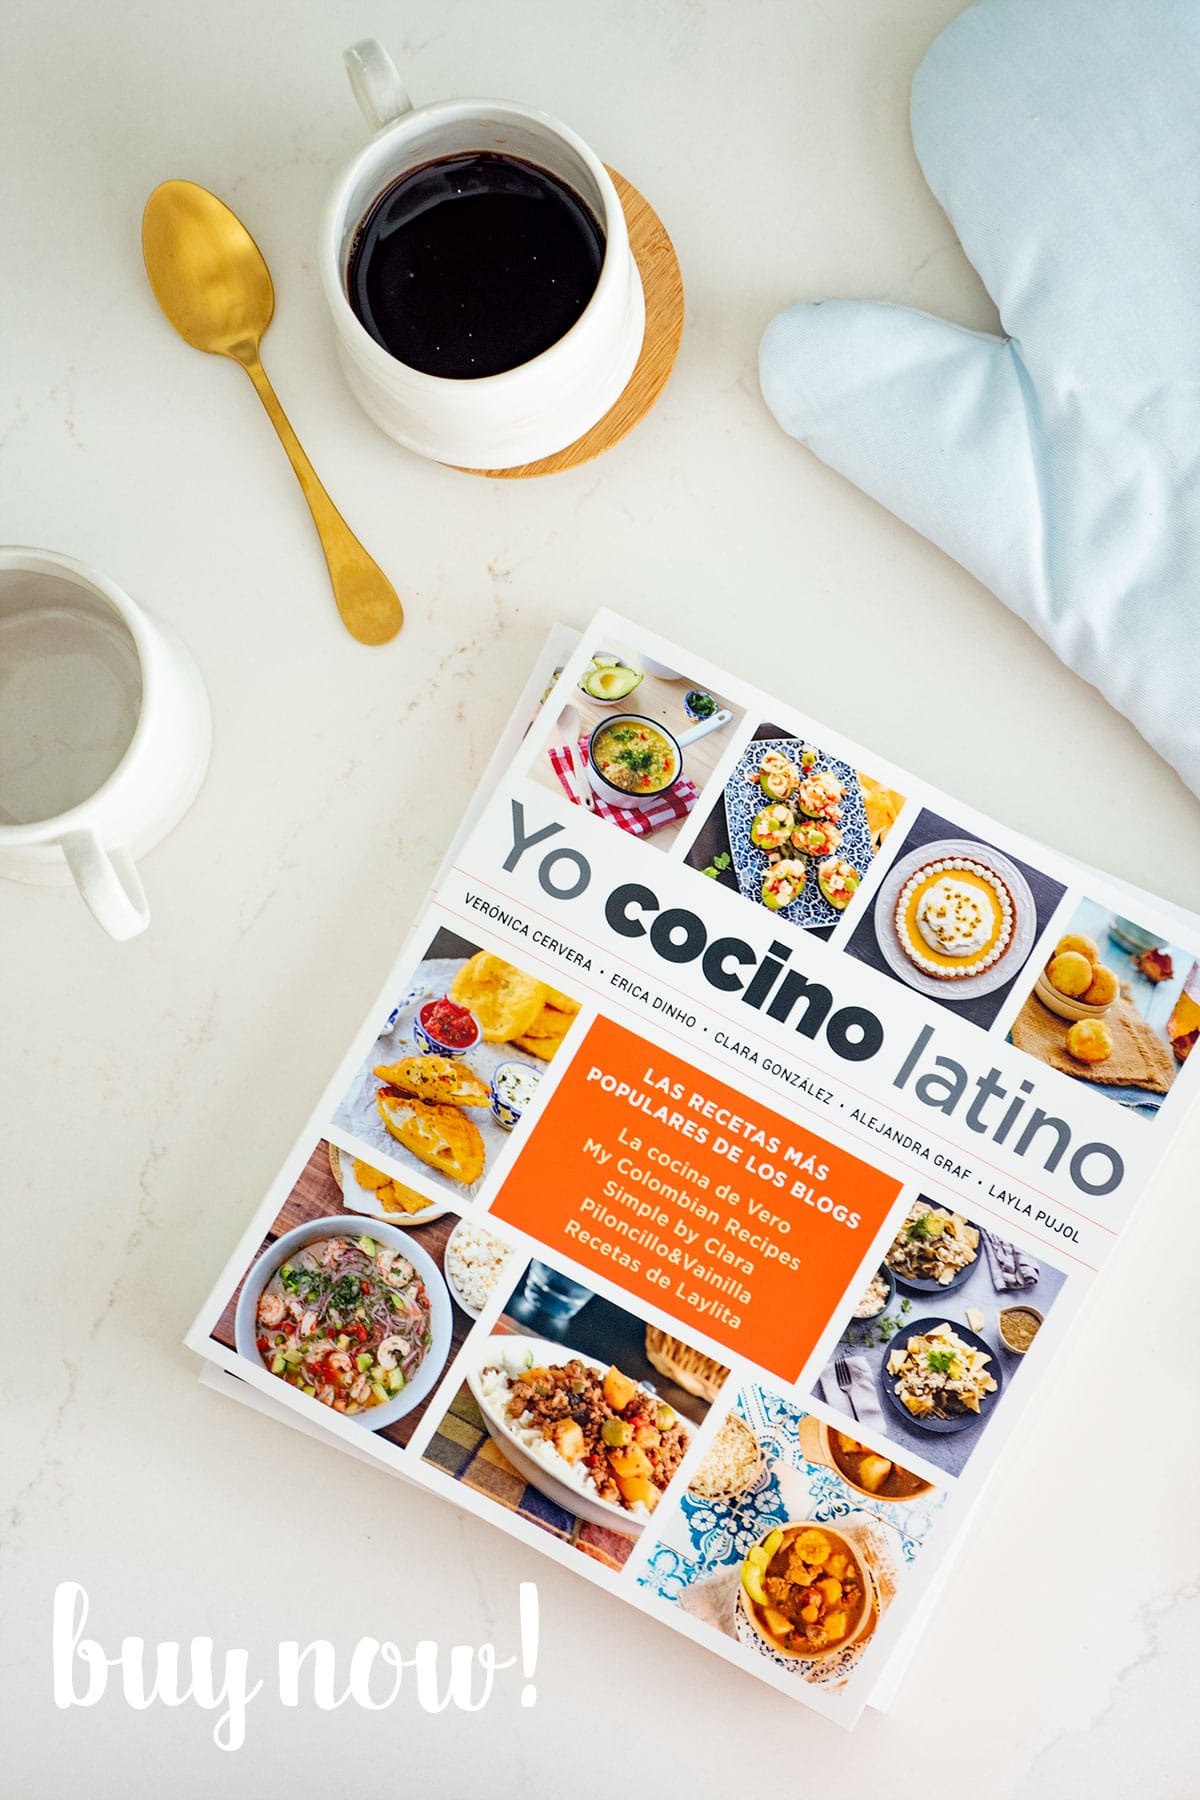 Yo Cocino Latino Cookbook on Kitchen Counter